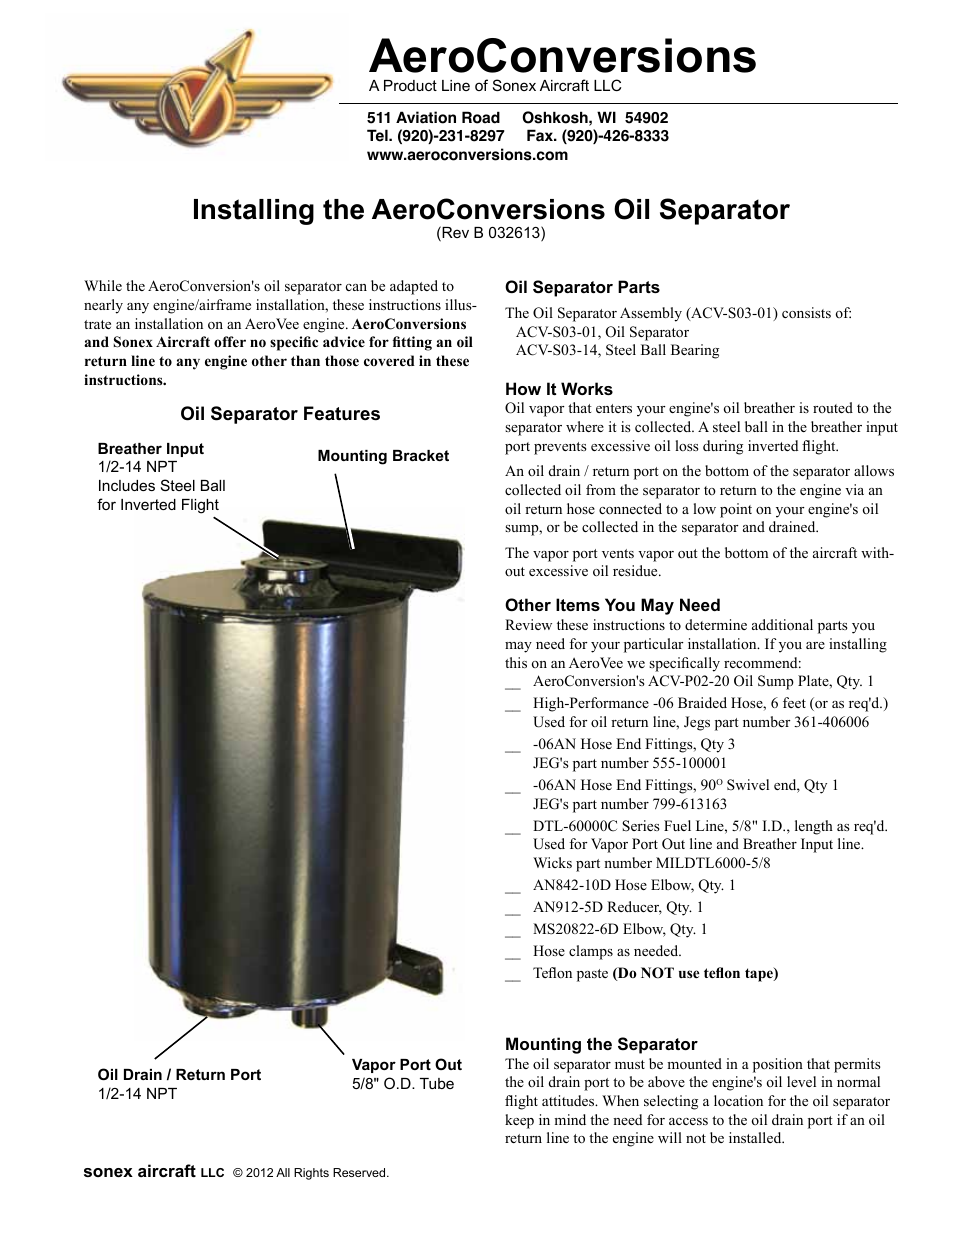 AeroConversions Oil Separator Installation